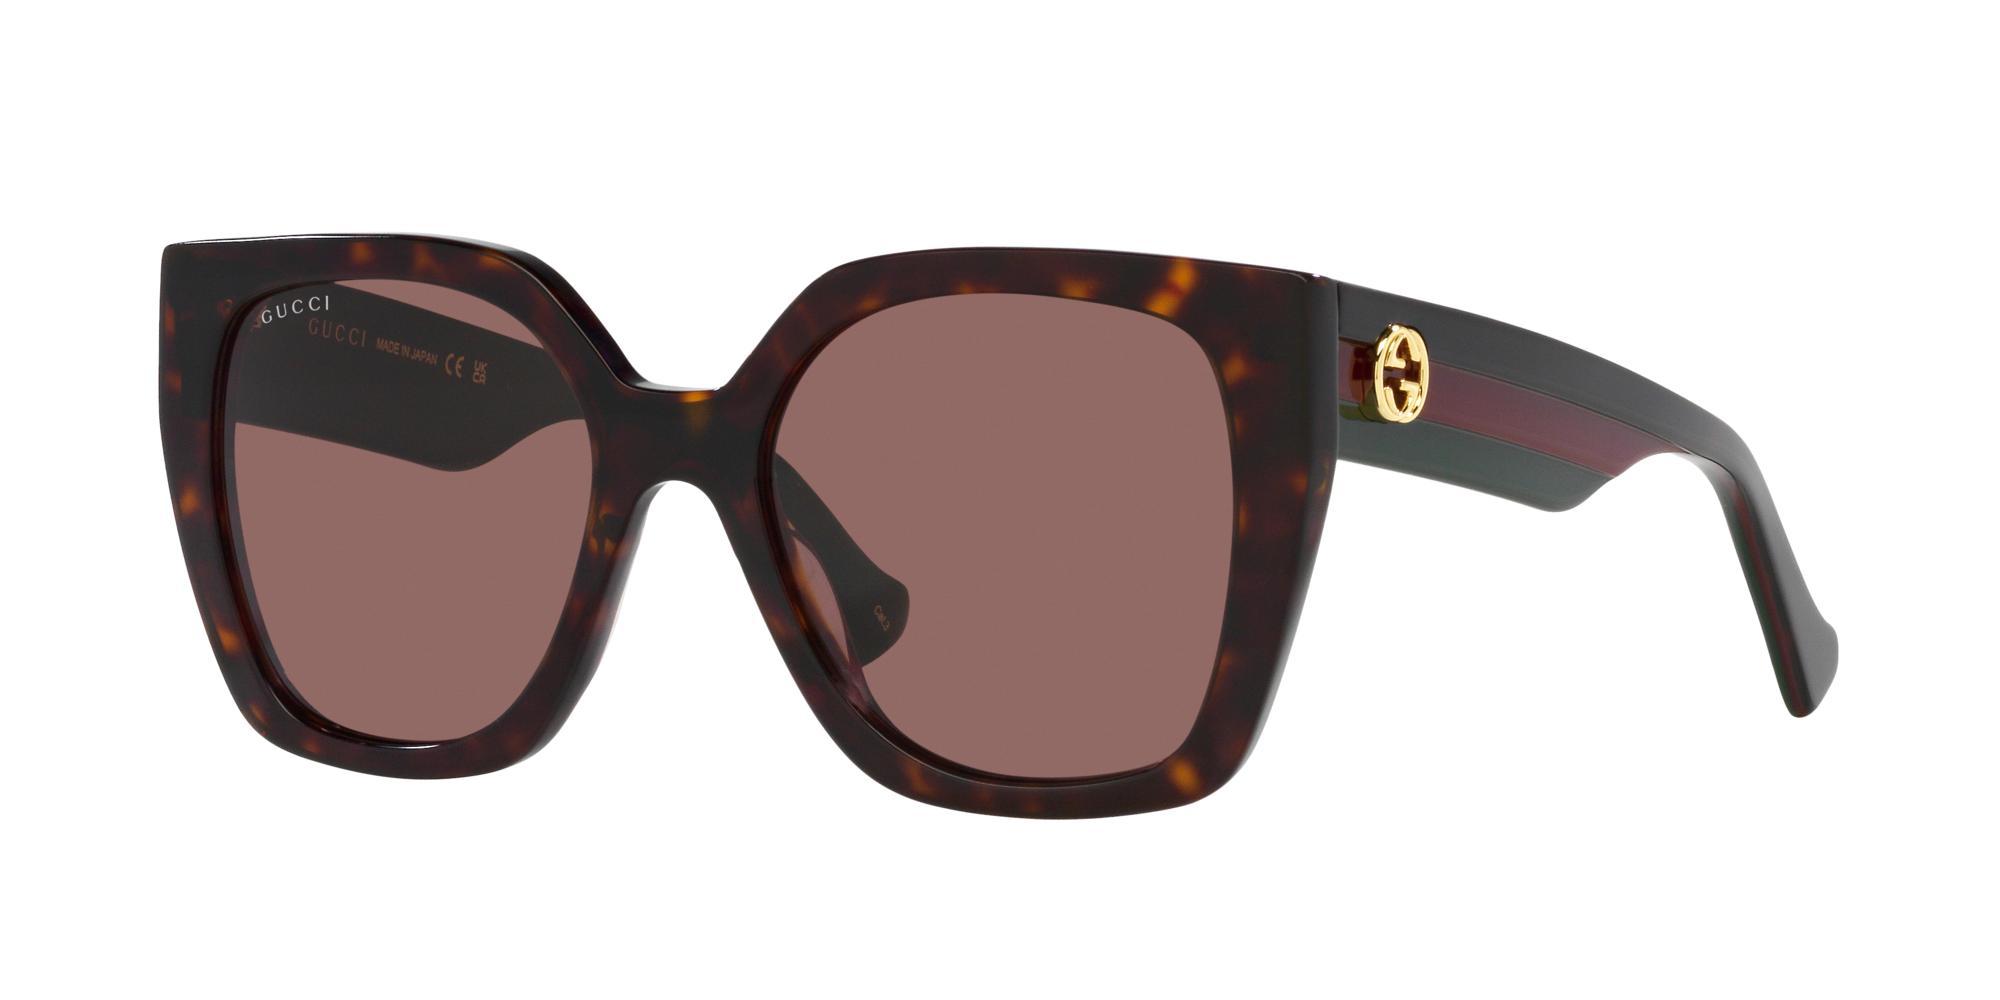 Carolina Herrera 55mm Gradient Square Sunglasses Product Image